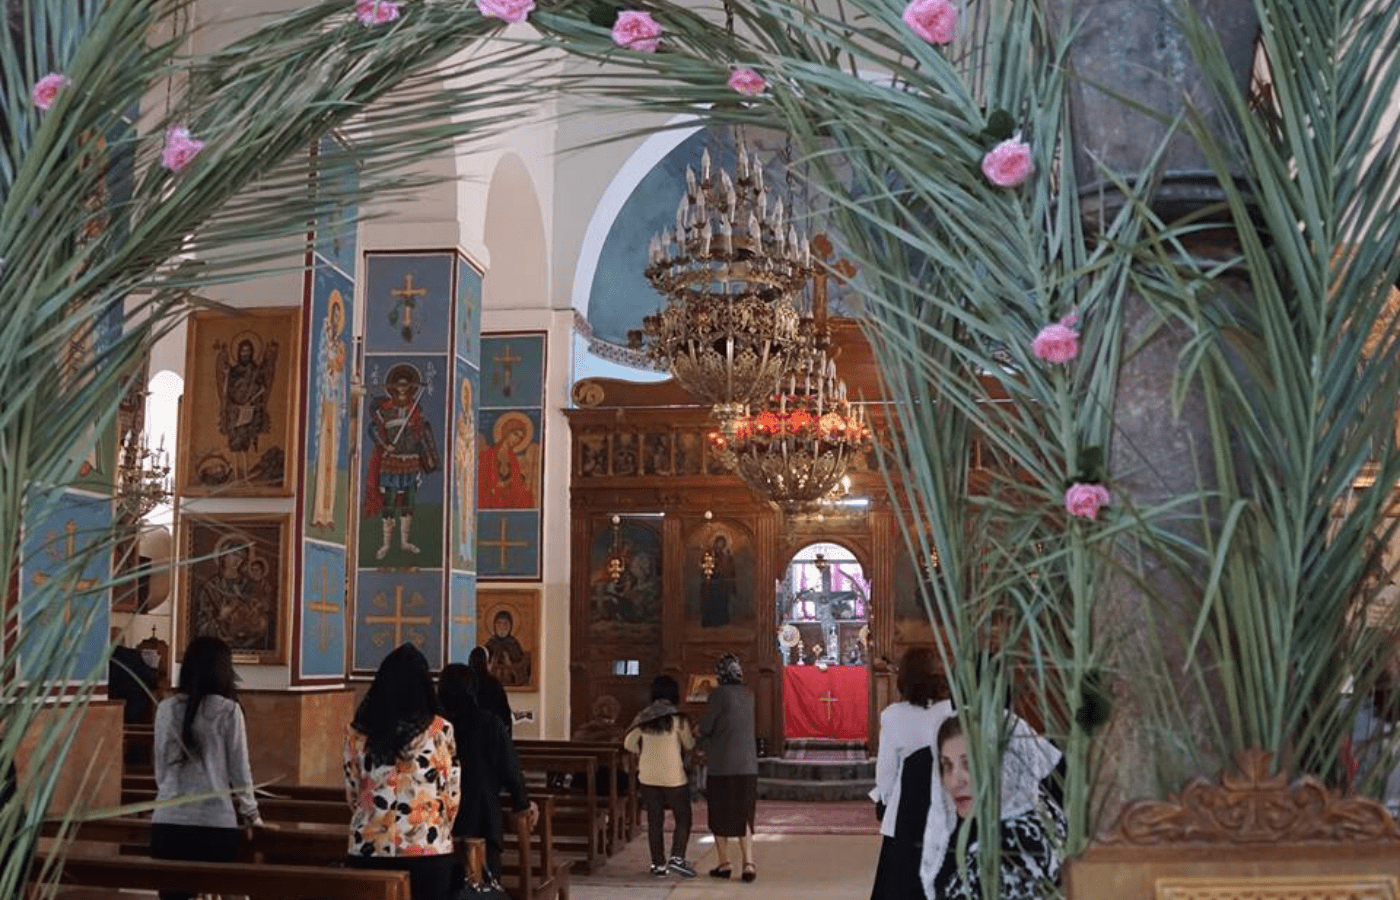 Pilgrimage, religion in Jordan